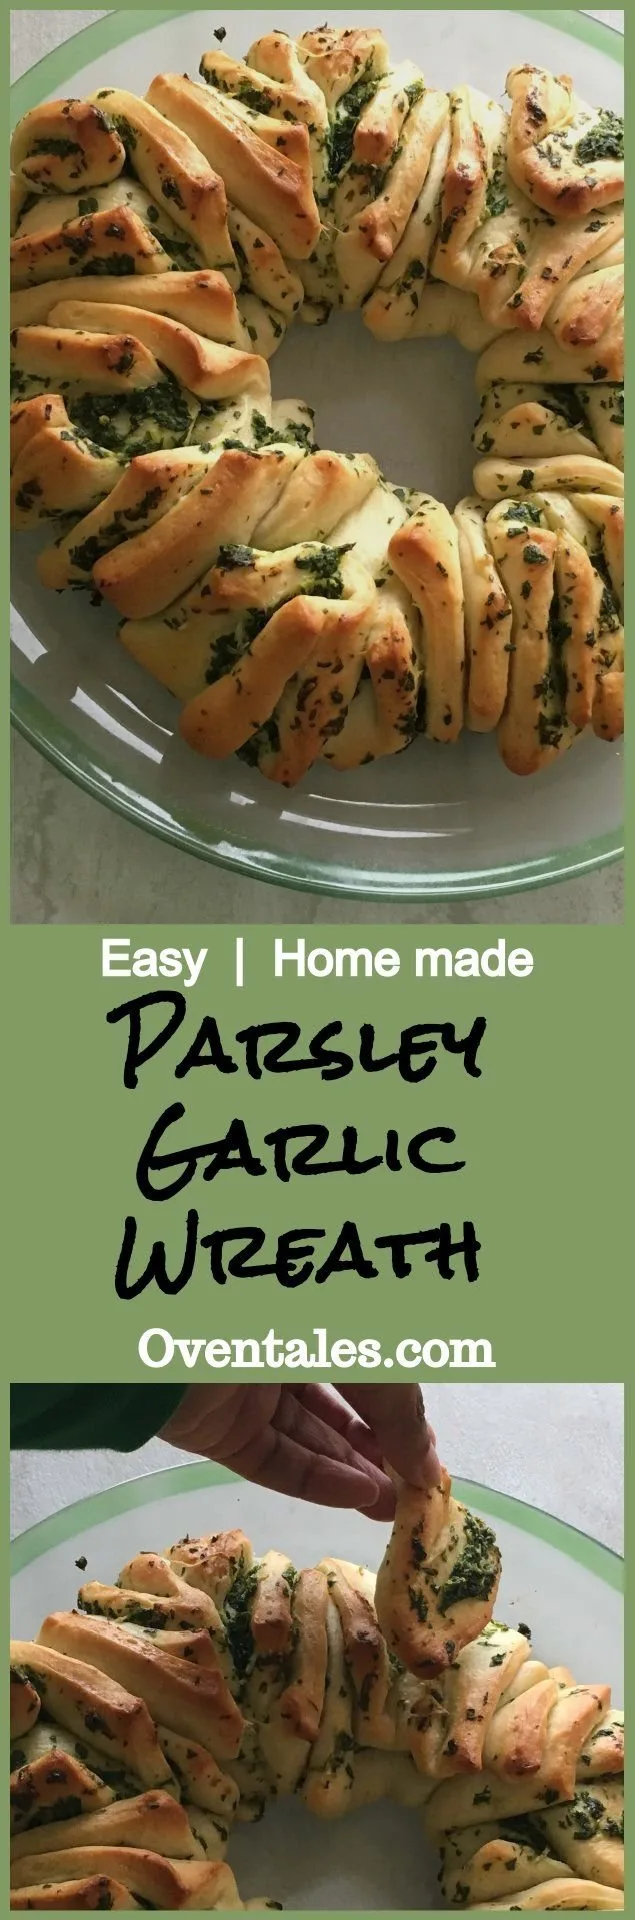 https://oventales.com/wp-content/uploads/2017/07/Parsley-Garlic-Wreath-Bread.jpg